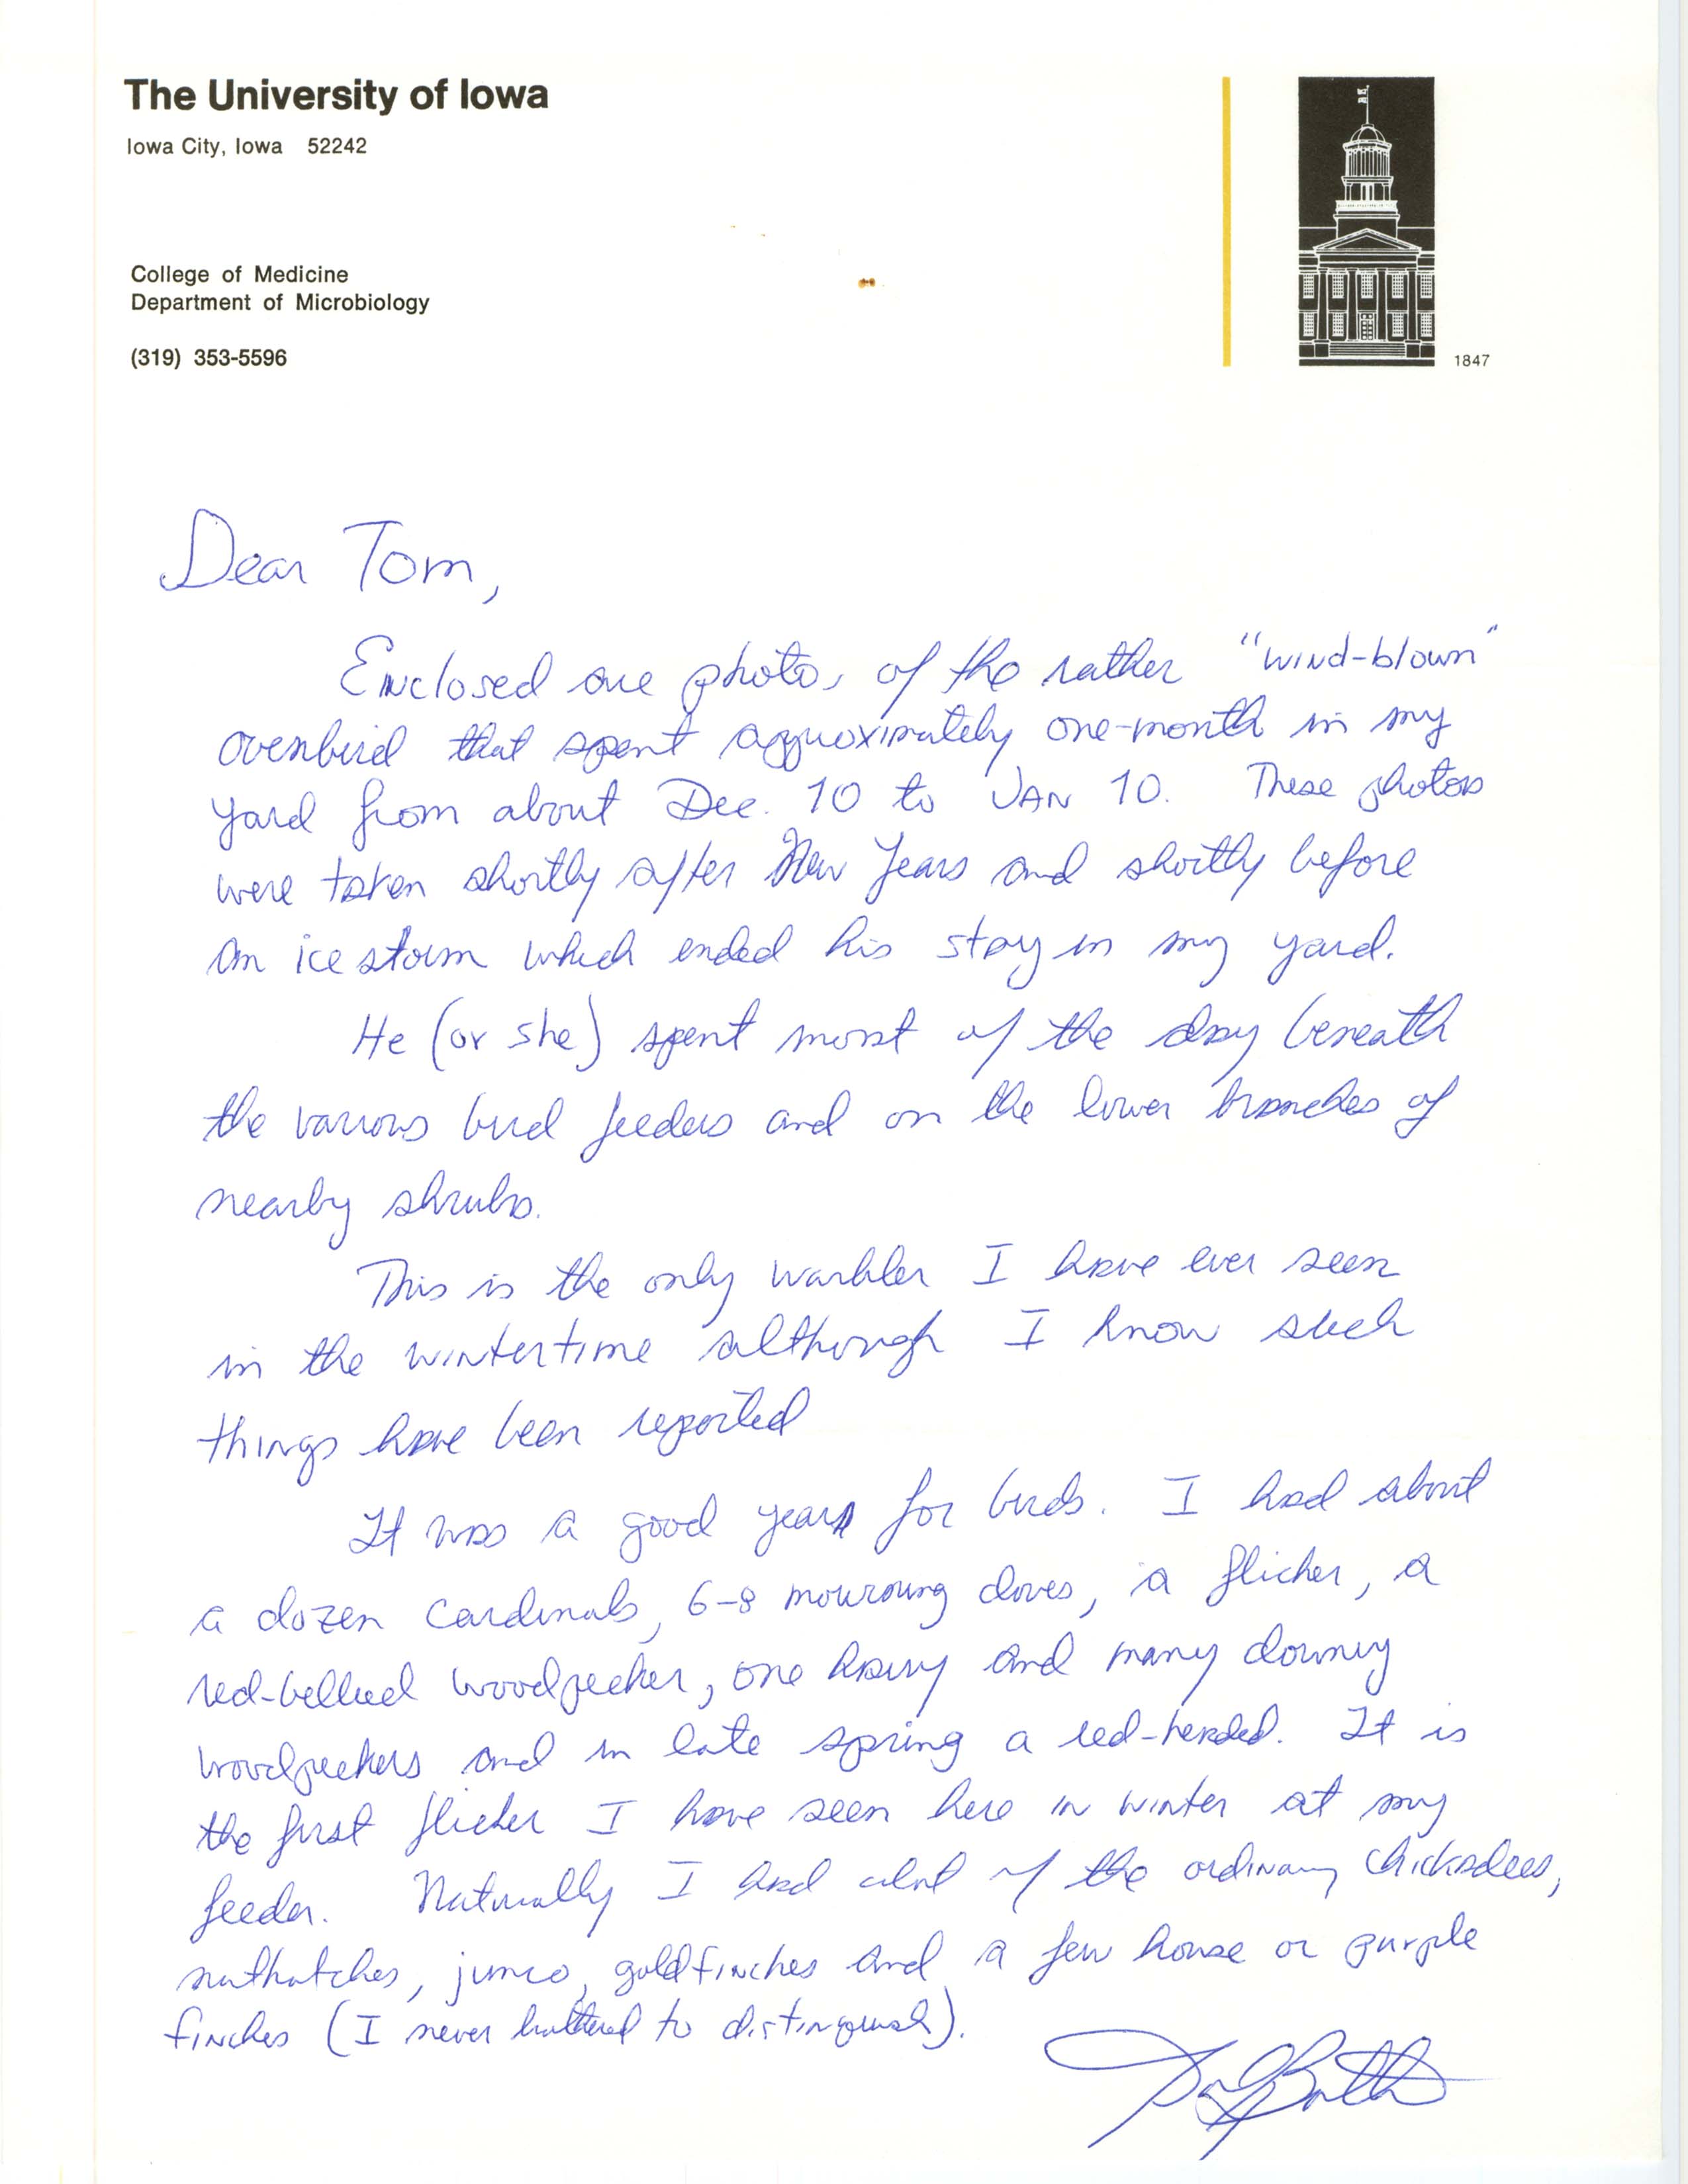 John Bath letter to Thomas Kent regarding an Ovenbird sighting and birding in general, unknown date